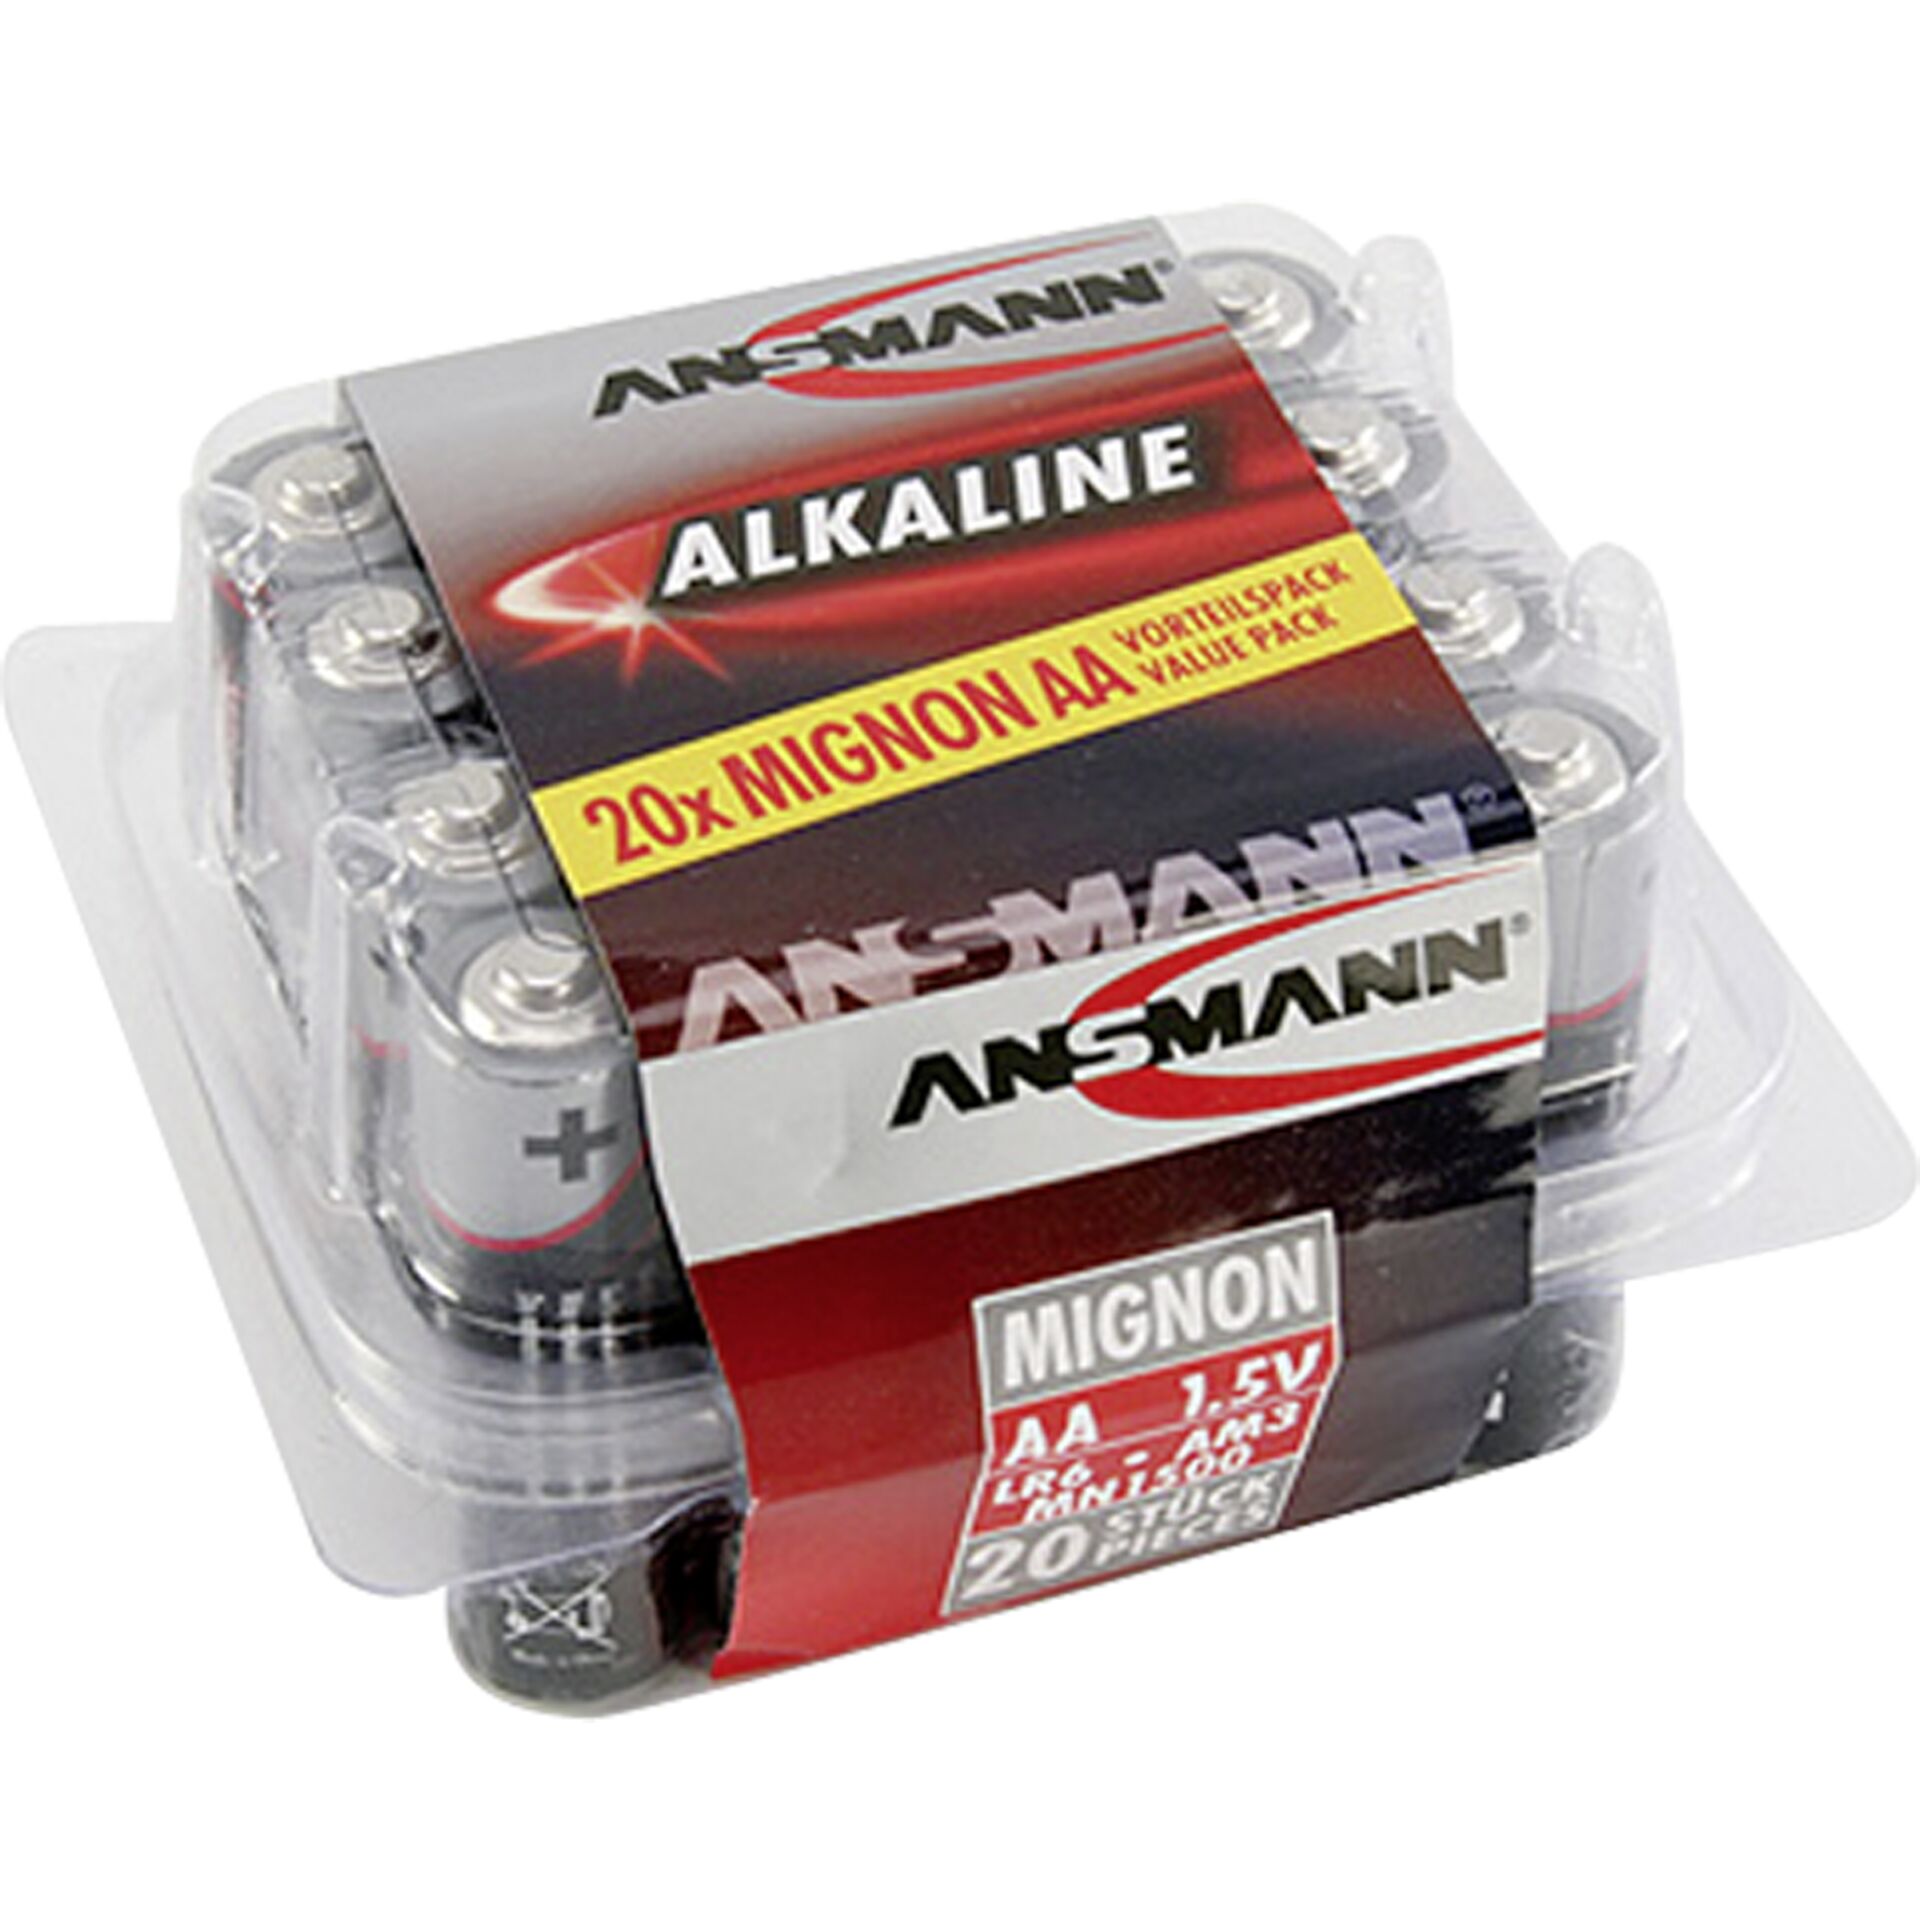 1x20 Ansmann Alkaline Mignon AA LR 6 red-line Box        501